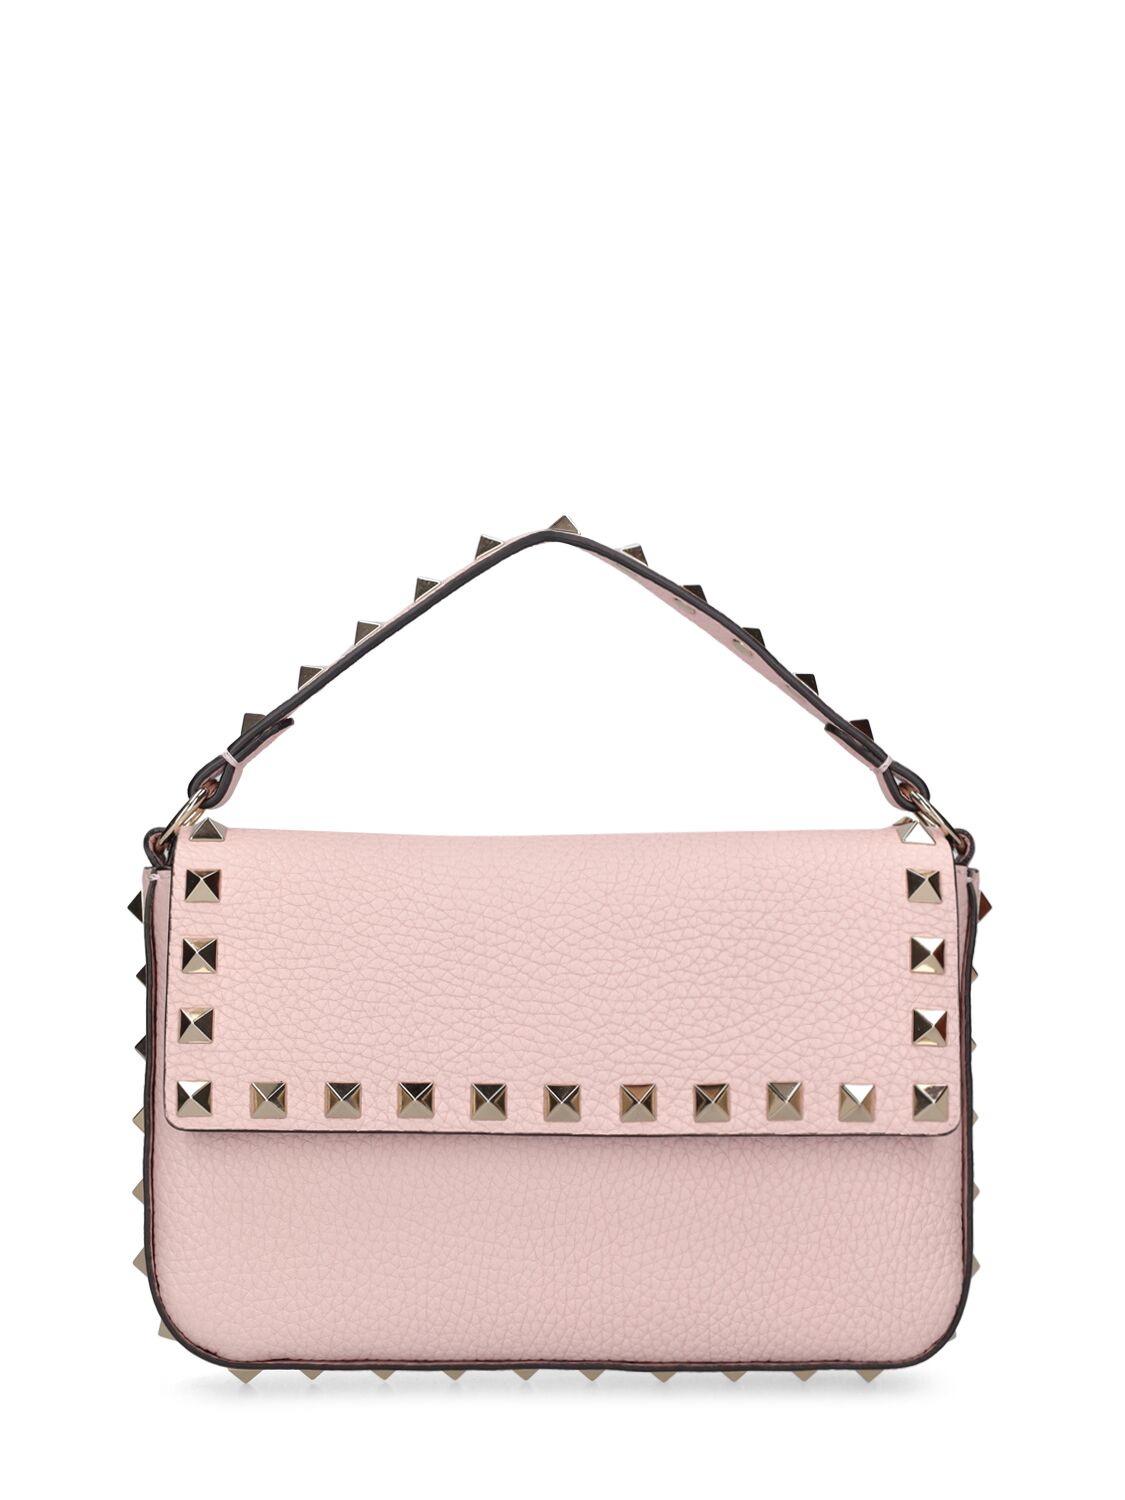 Valentino Garavani Small Rockstud Leather Top Handle Bag In Rose Quartz